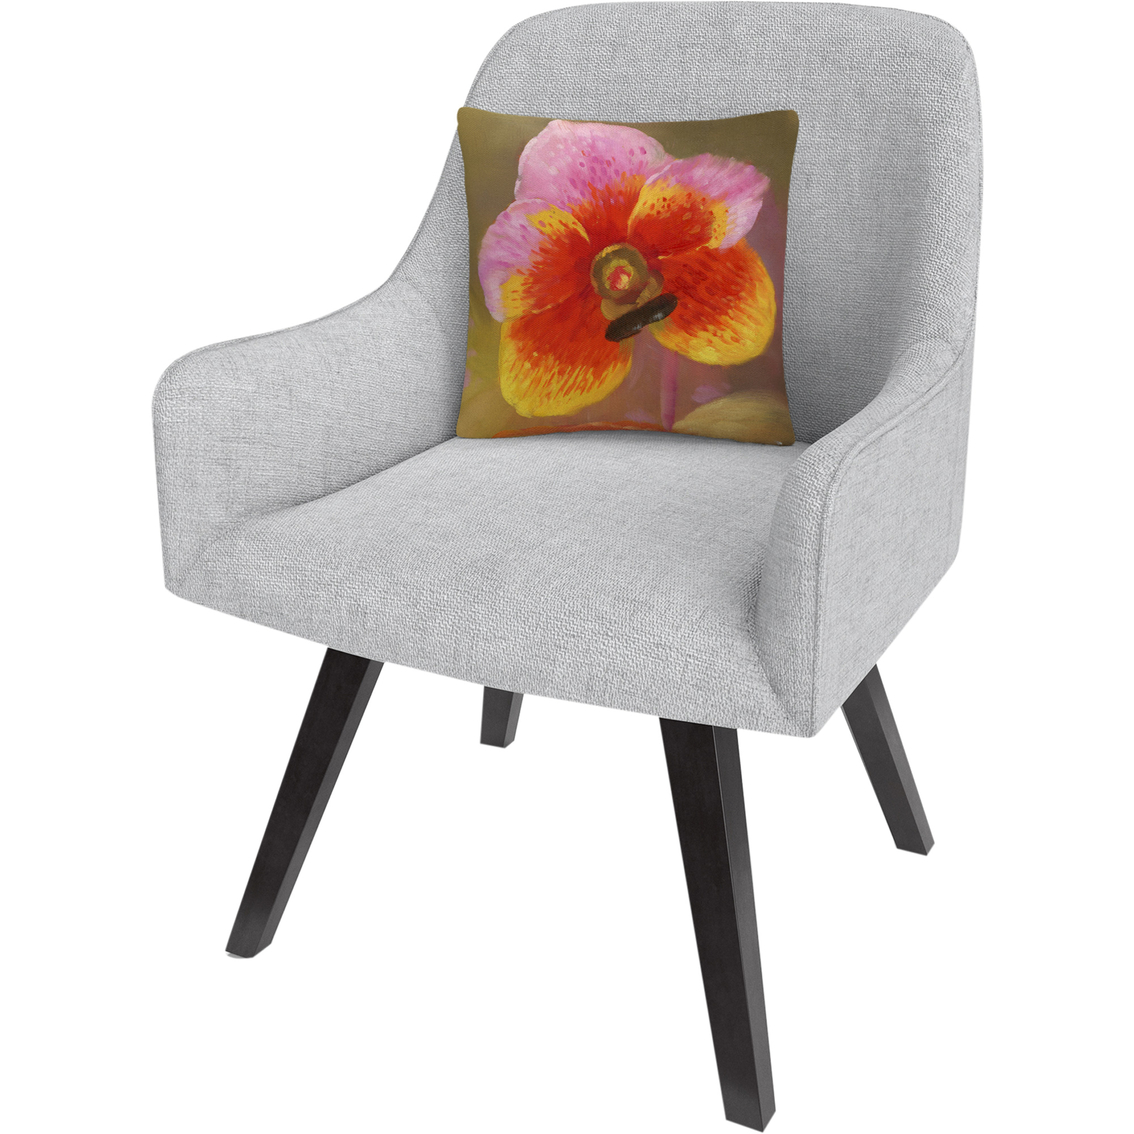 Trademark Fine Art Orange Pink Orchid Decorative Throw Pillow - Image 2 of 2